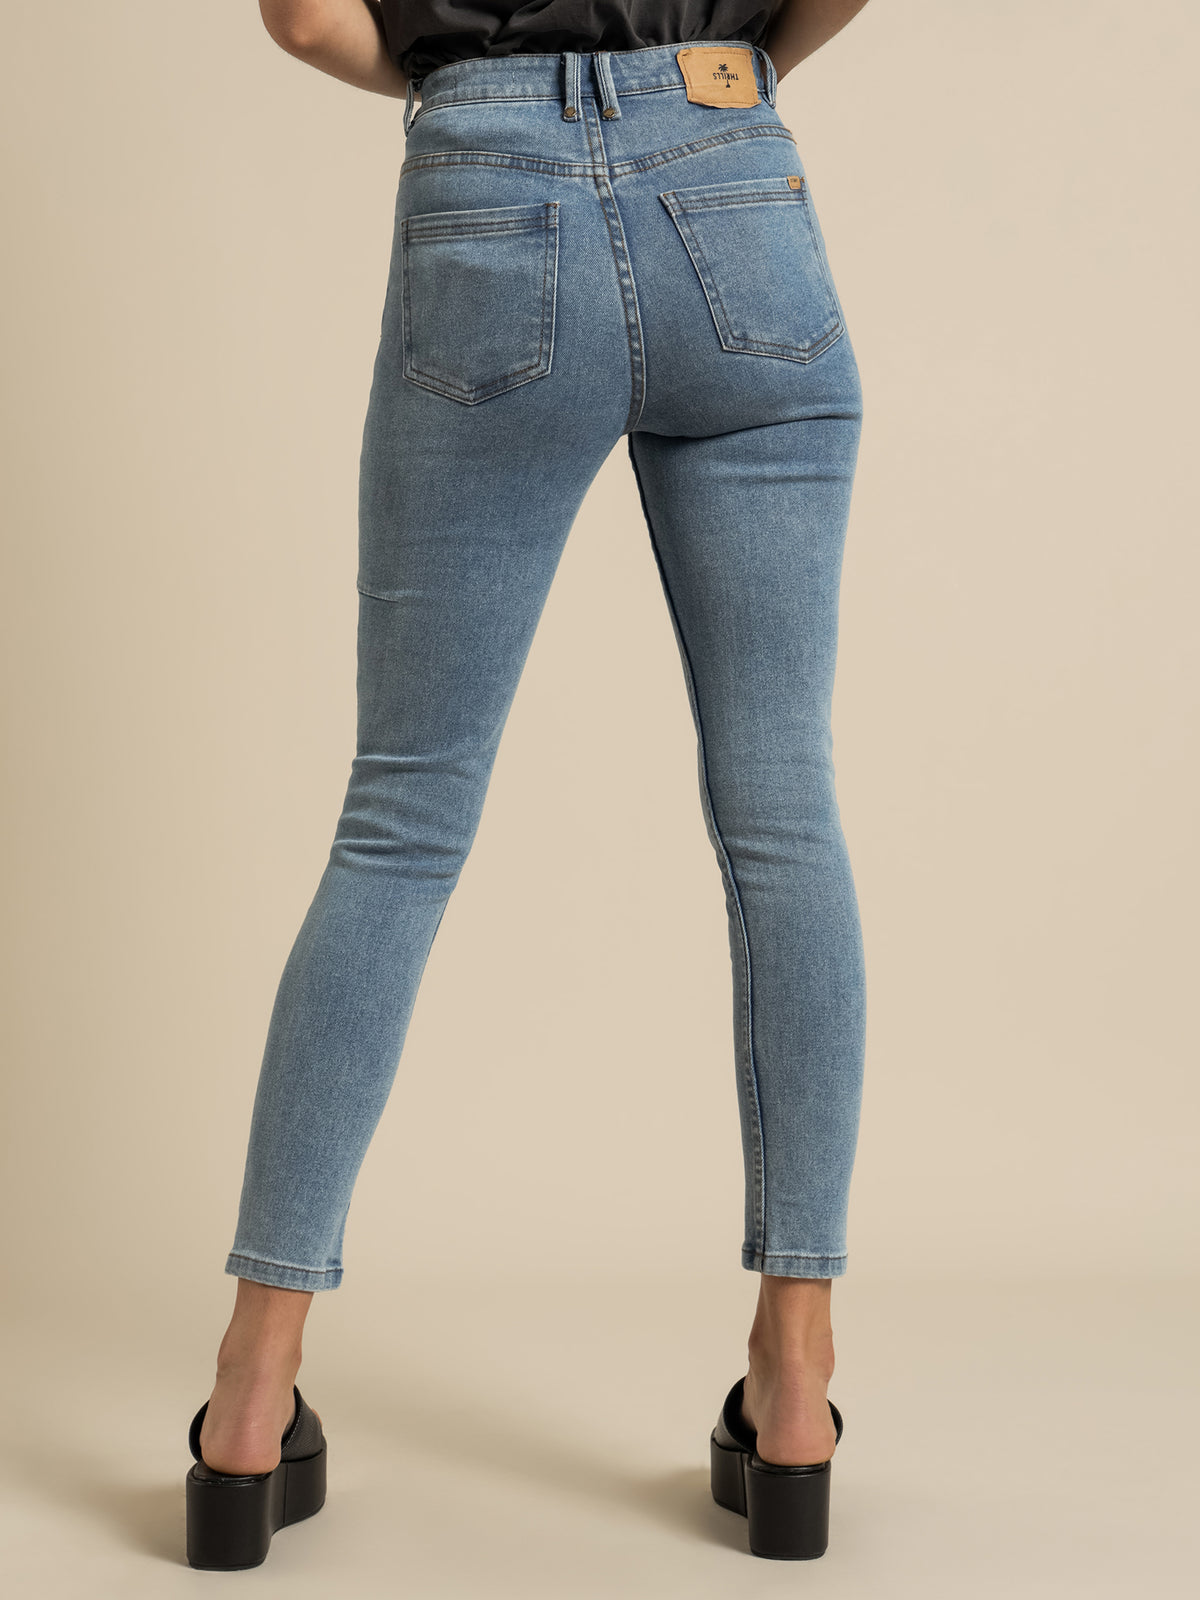 Elise Rigid Skinny Jeans in Mid Blue